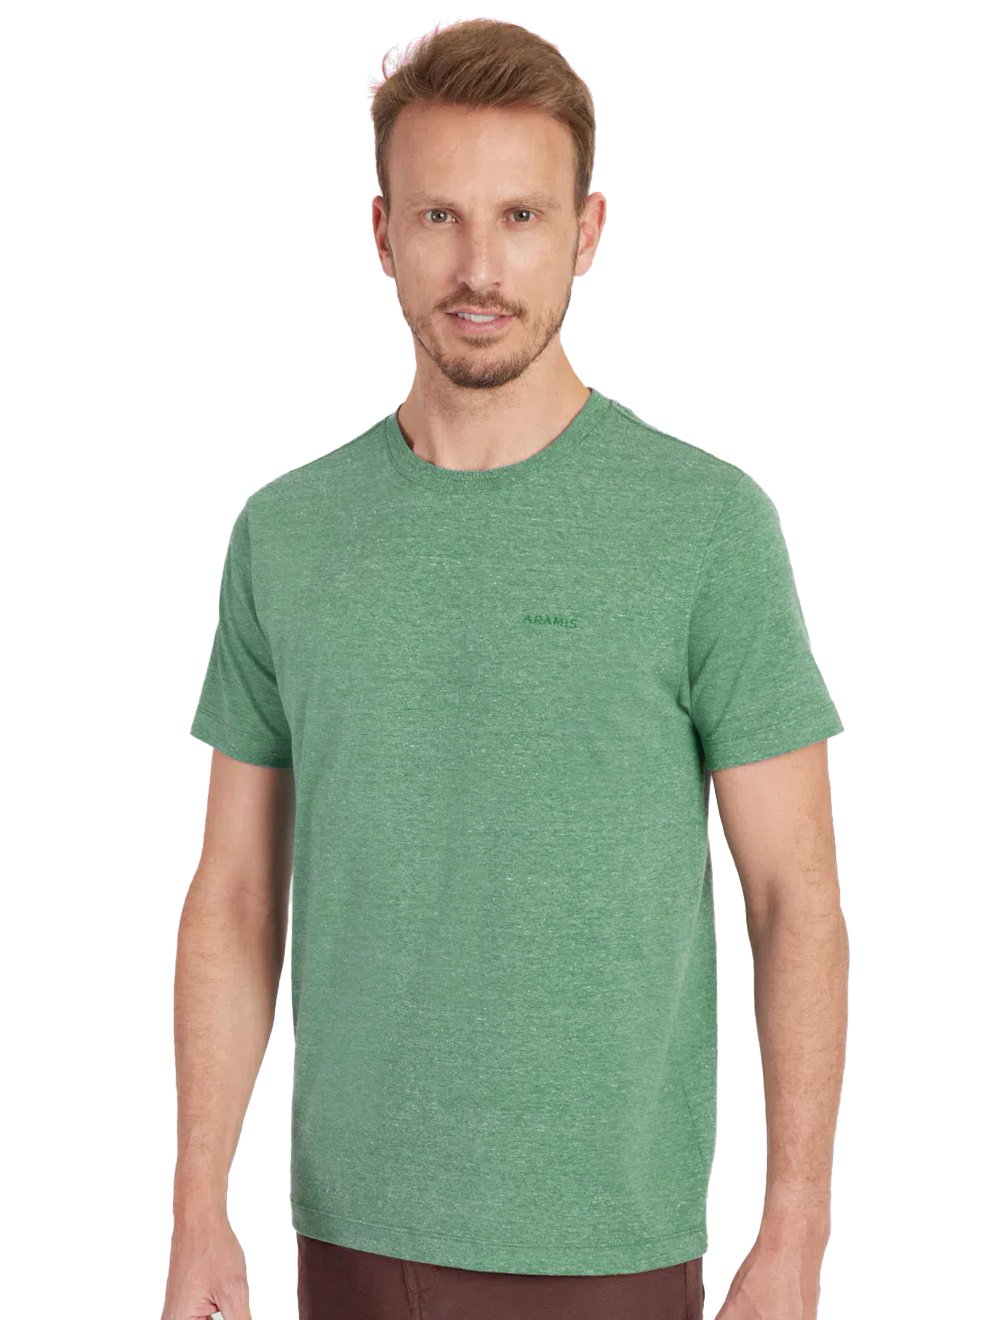 Camiseta Aramis Masculina Eco Lisa Verde Mescla